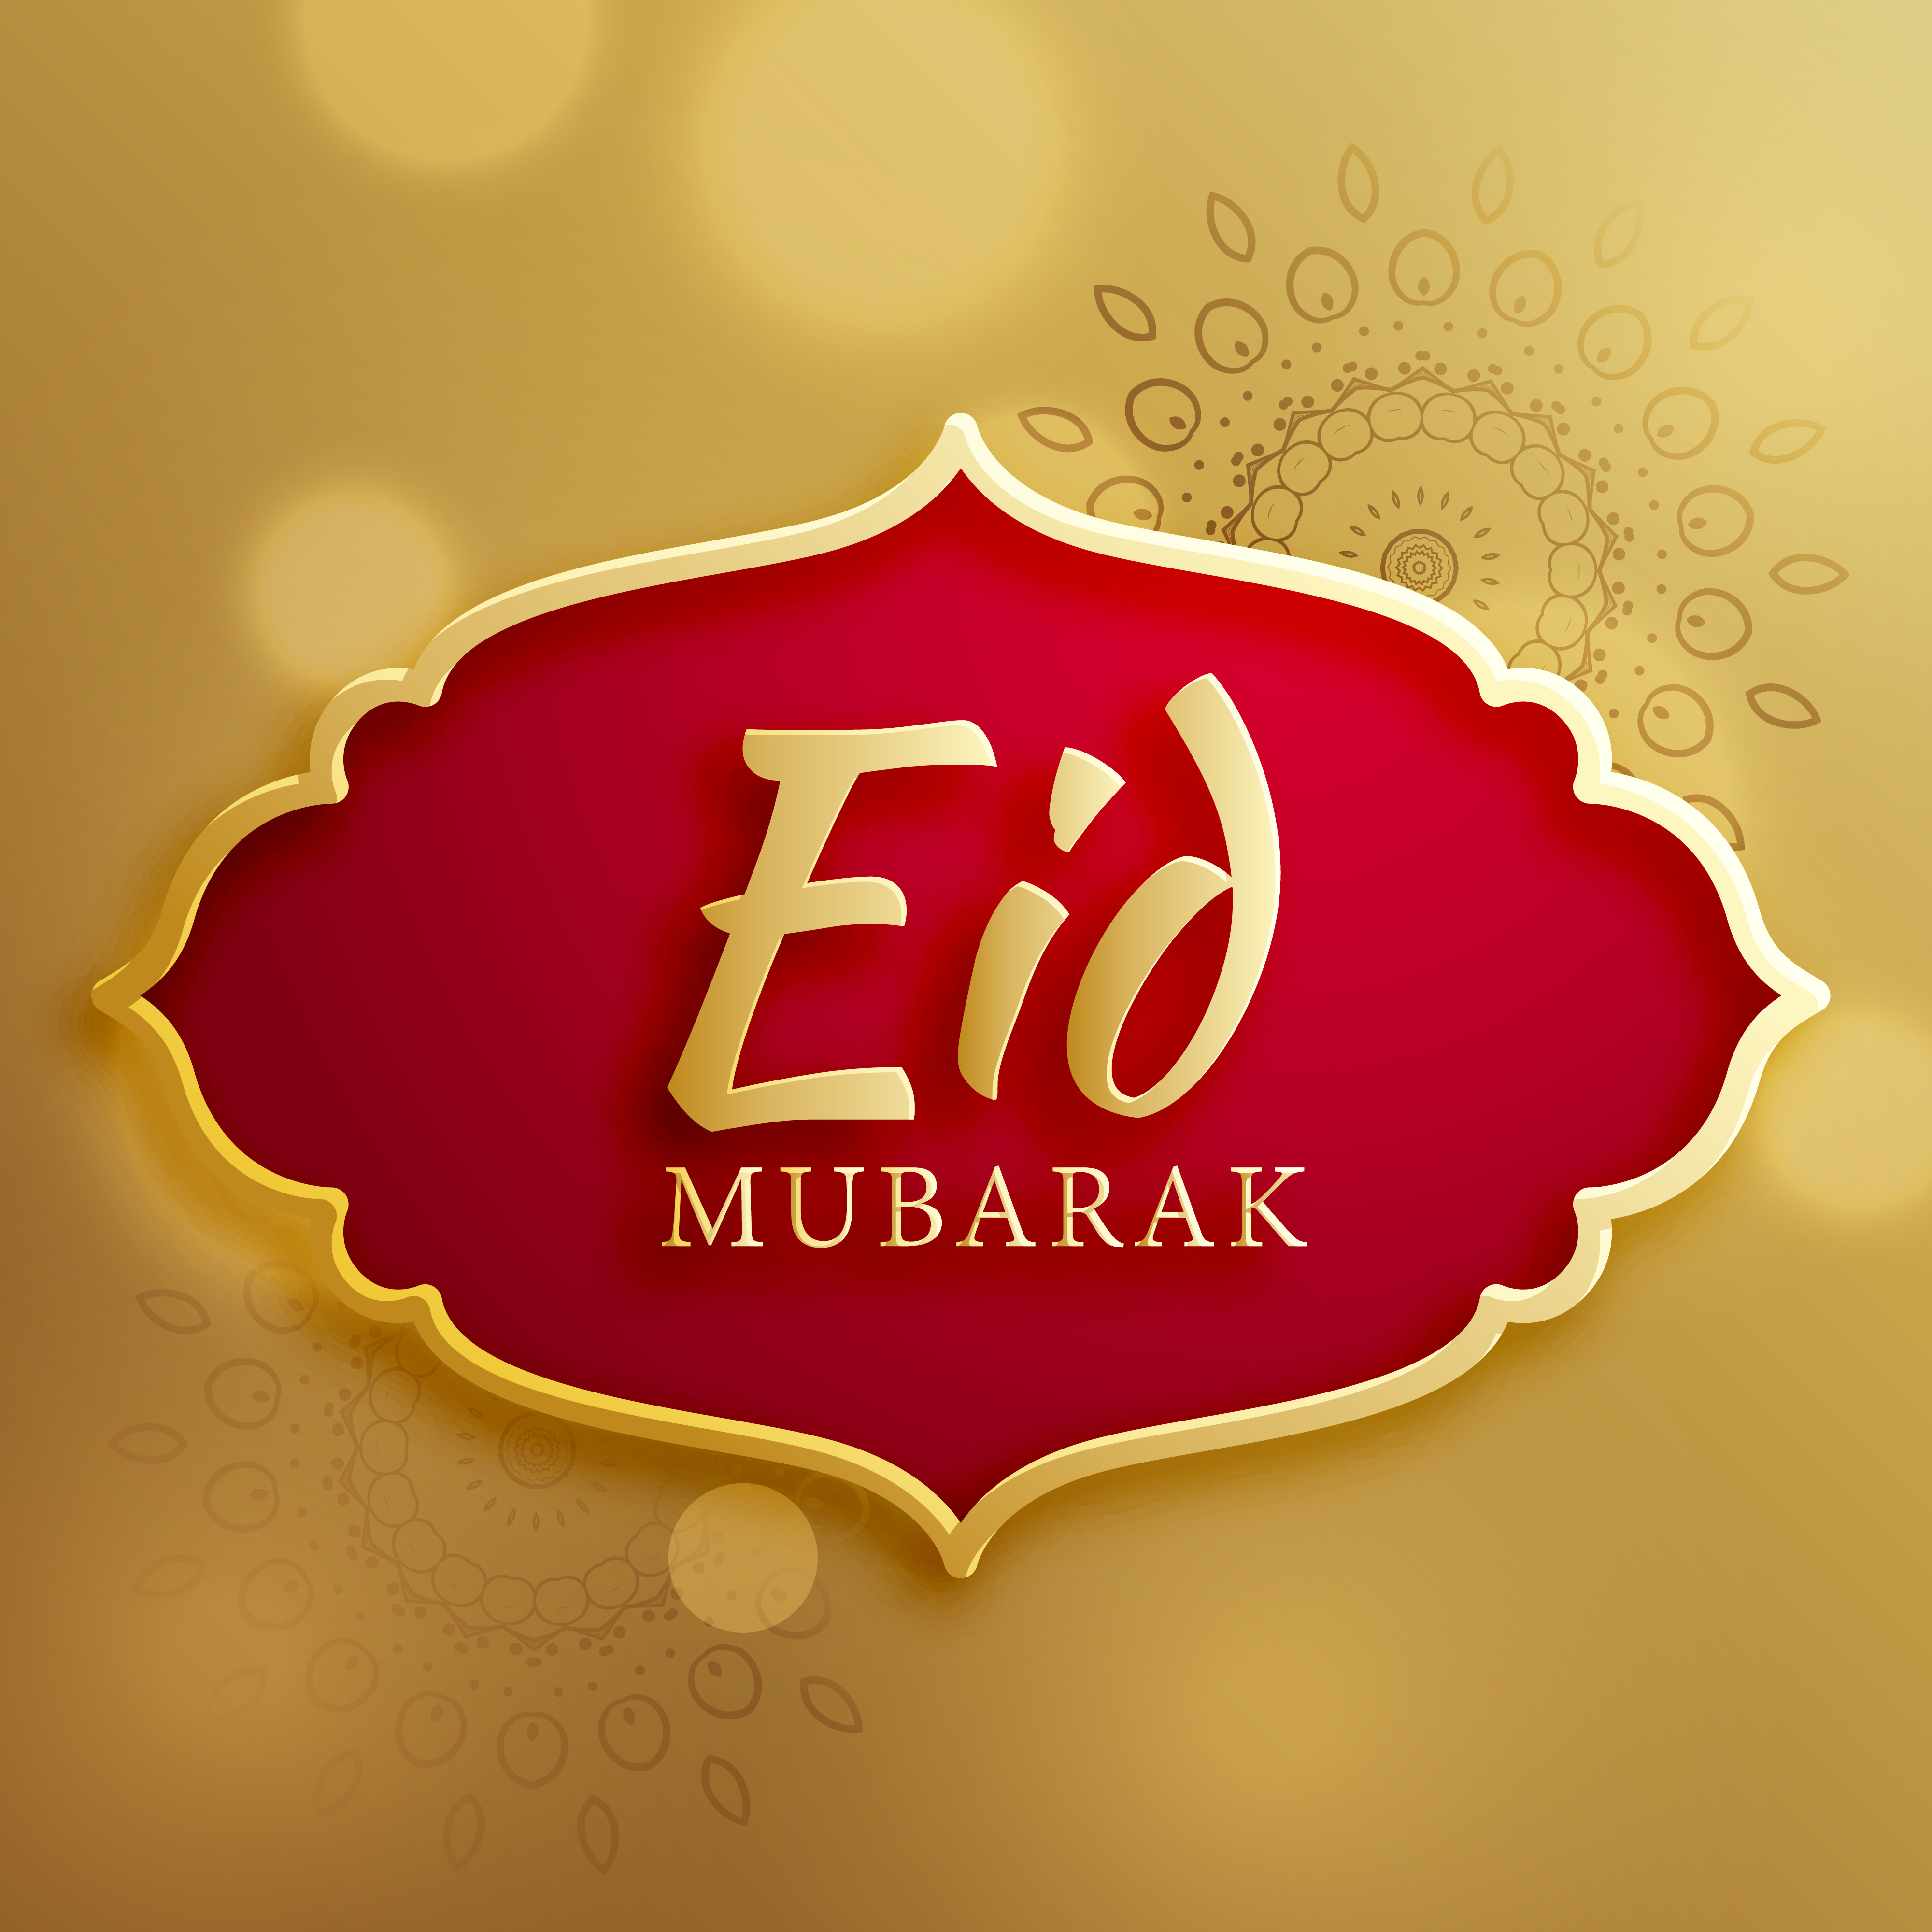 Eid mubarak festival greeting card on golden background 